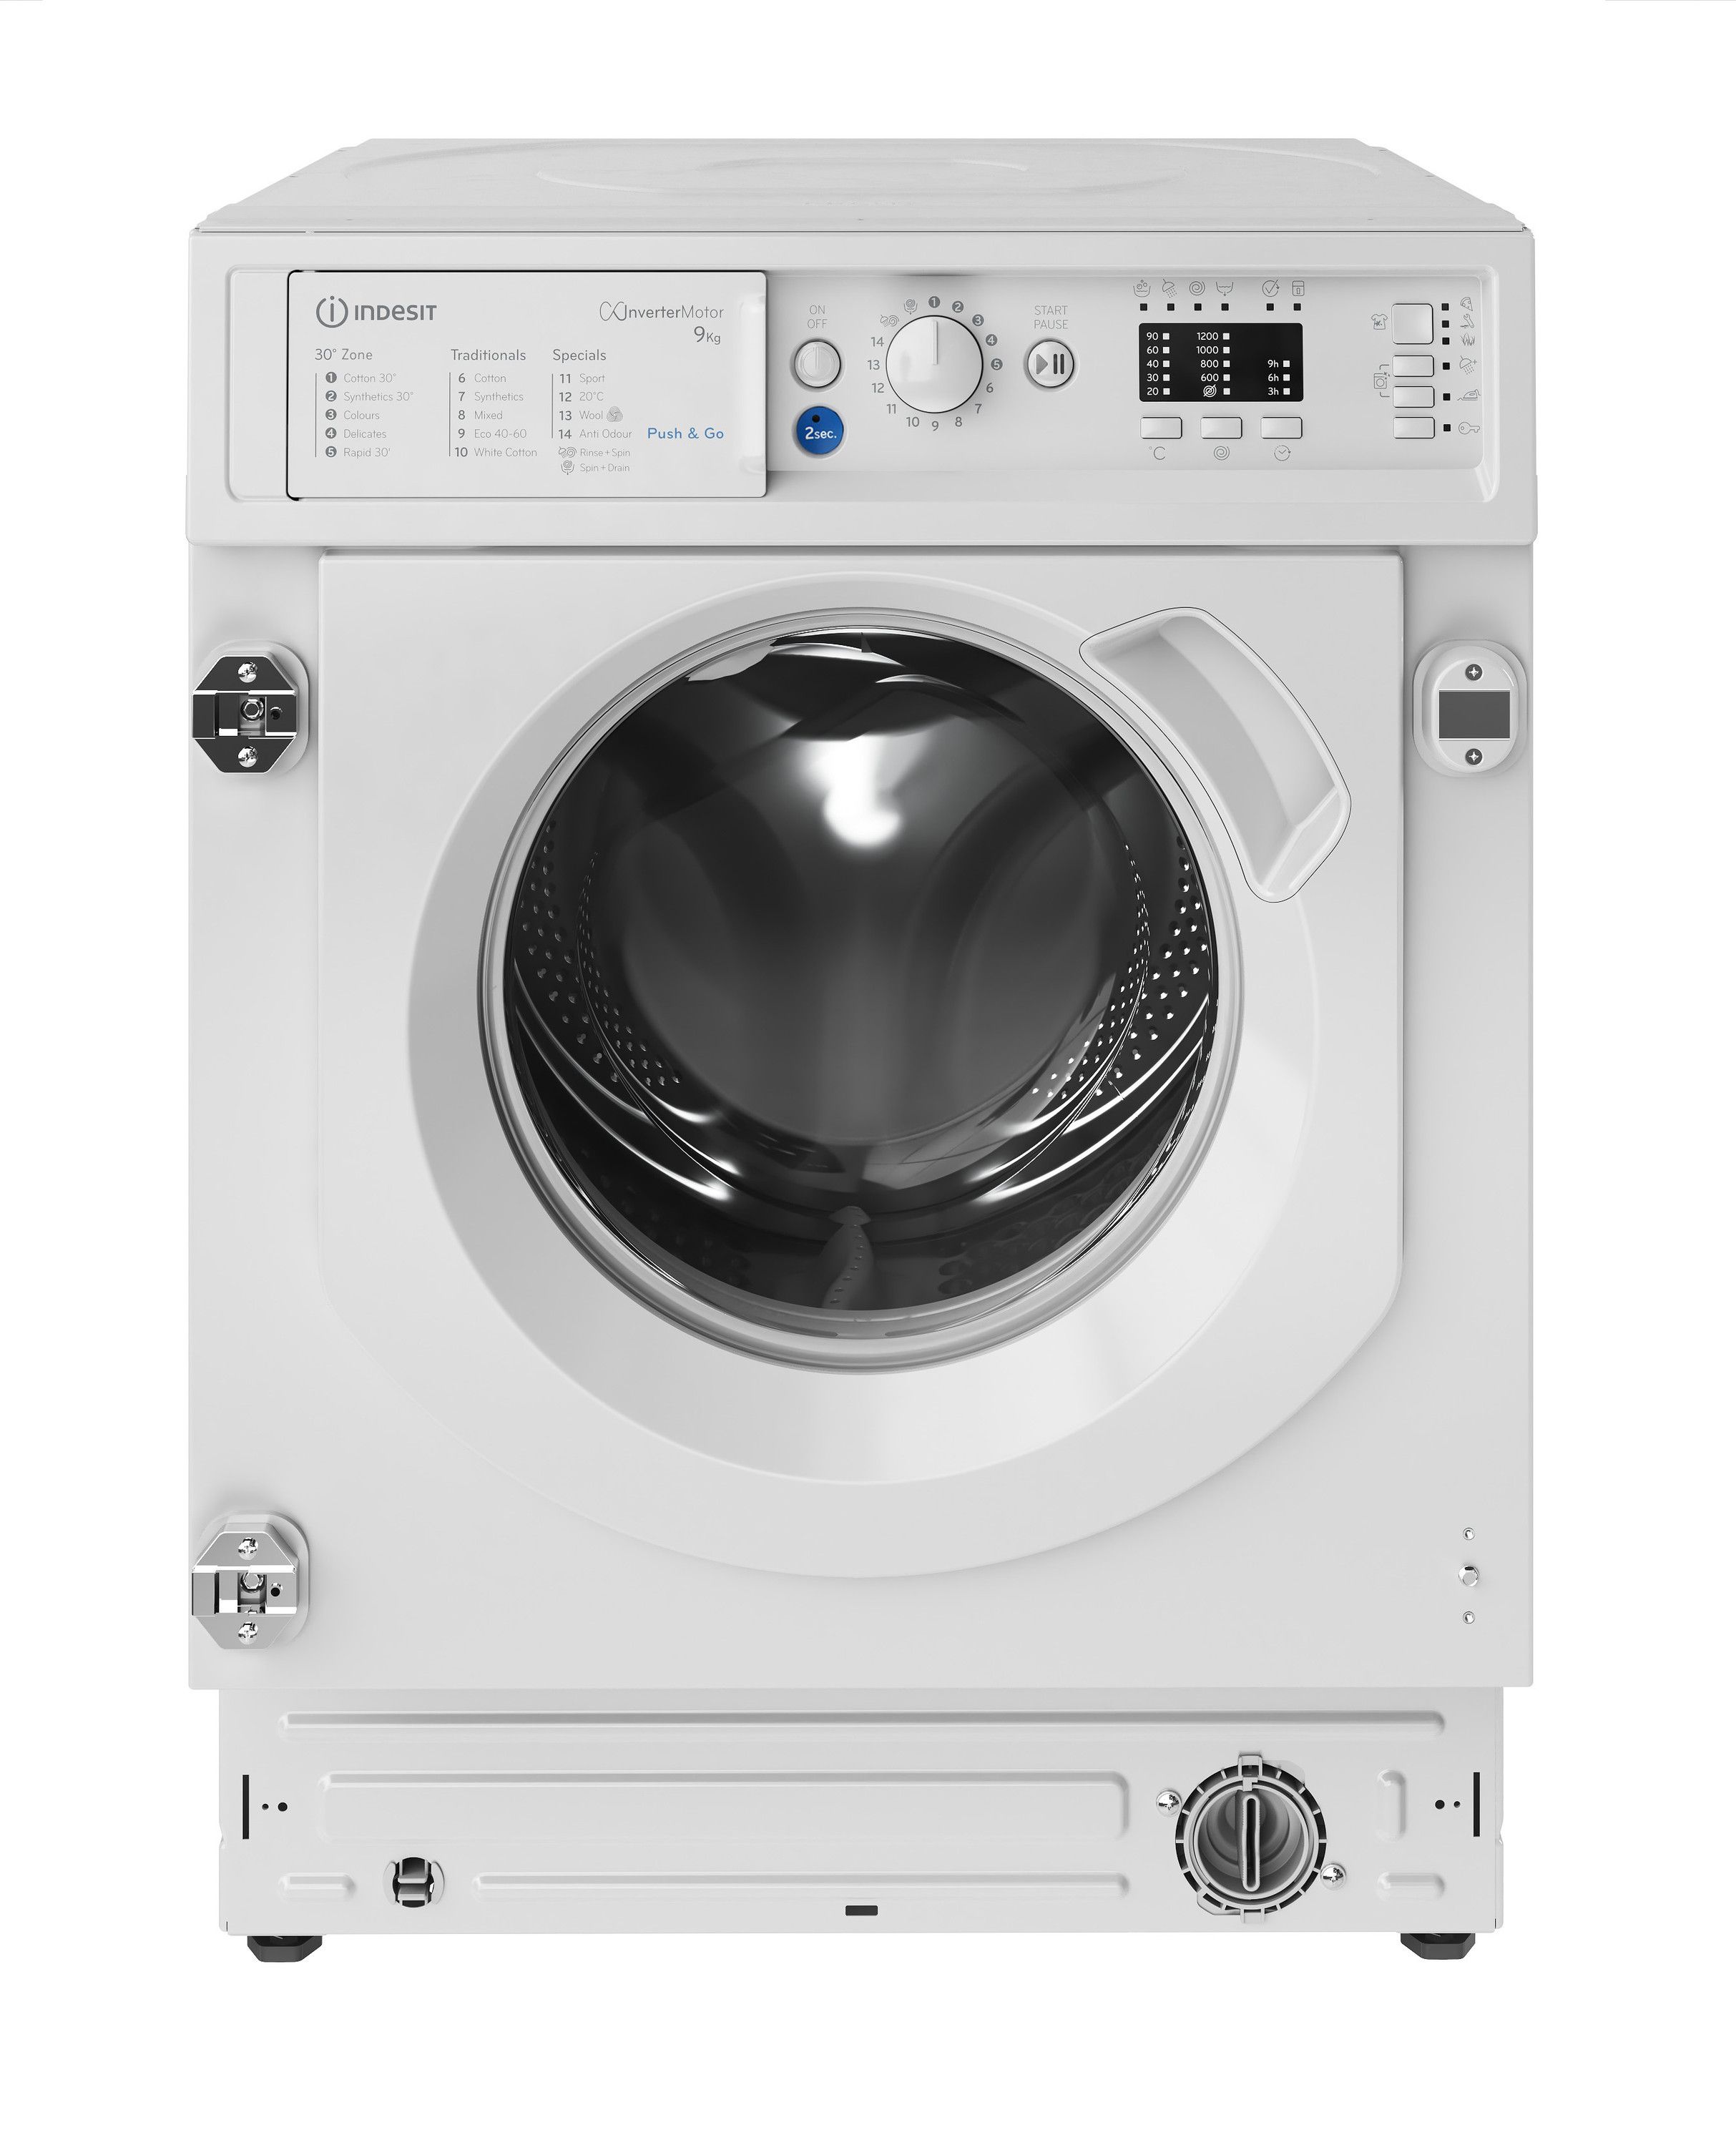 Indesit BIWMIL91485UK Integrated 9kg Washing Machine with 1400 rpm - White - B Rated White